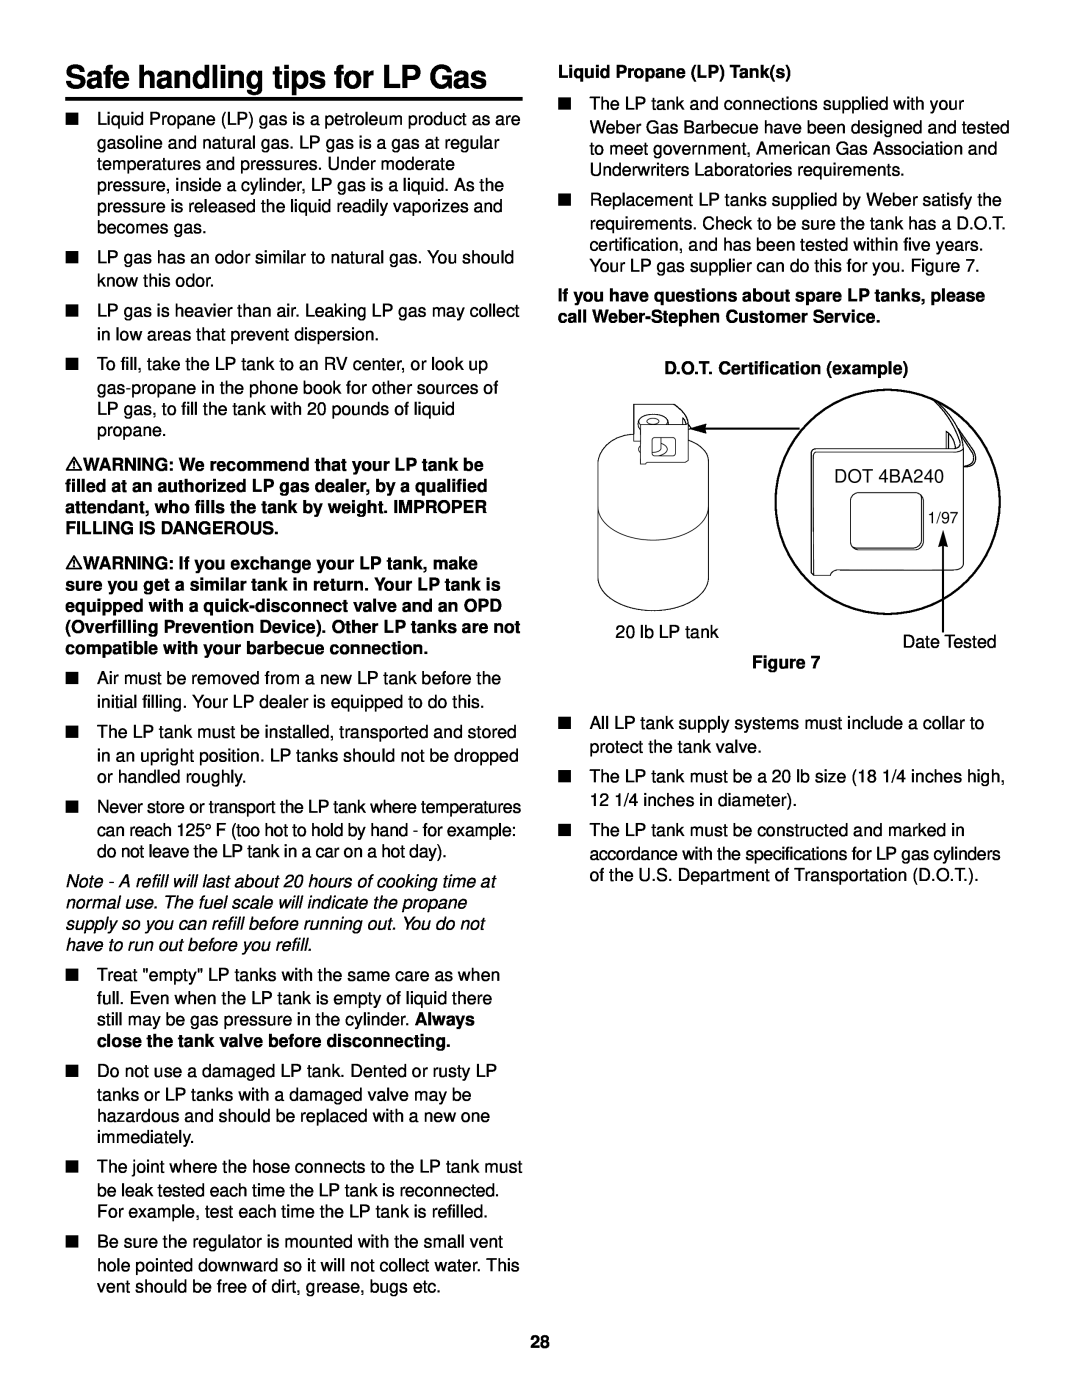 Weber 1000 LX Series Safe handling tips for LP Gas, DOT 4BA240, Liquid Propane LP Tanks, D.O.T. Certification example 